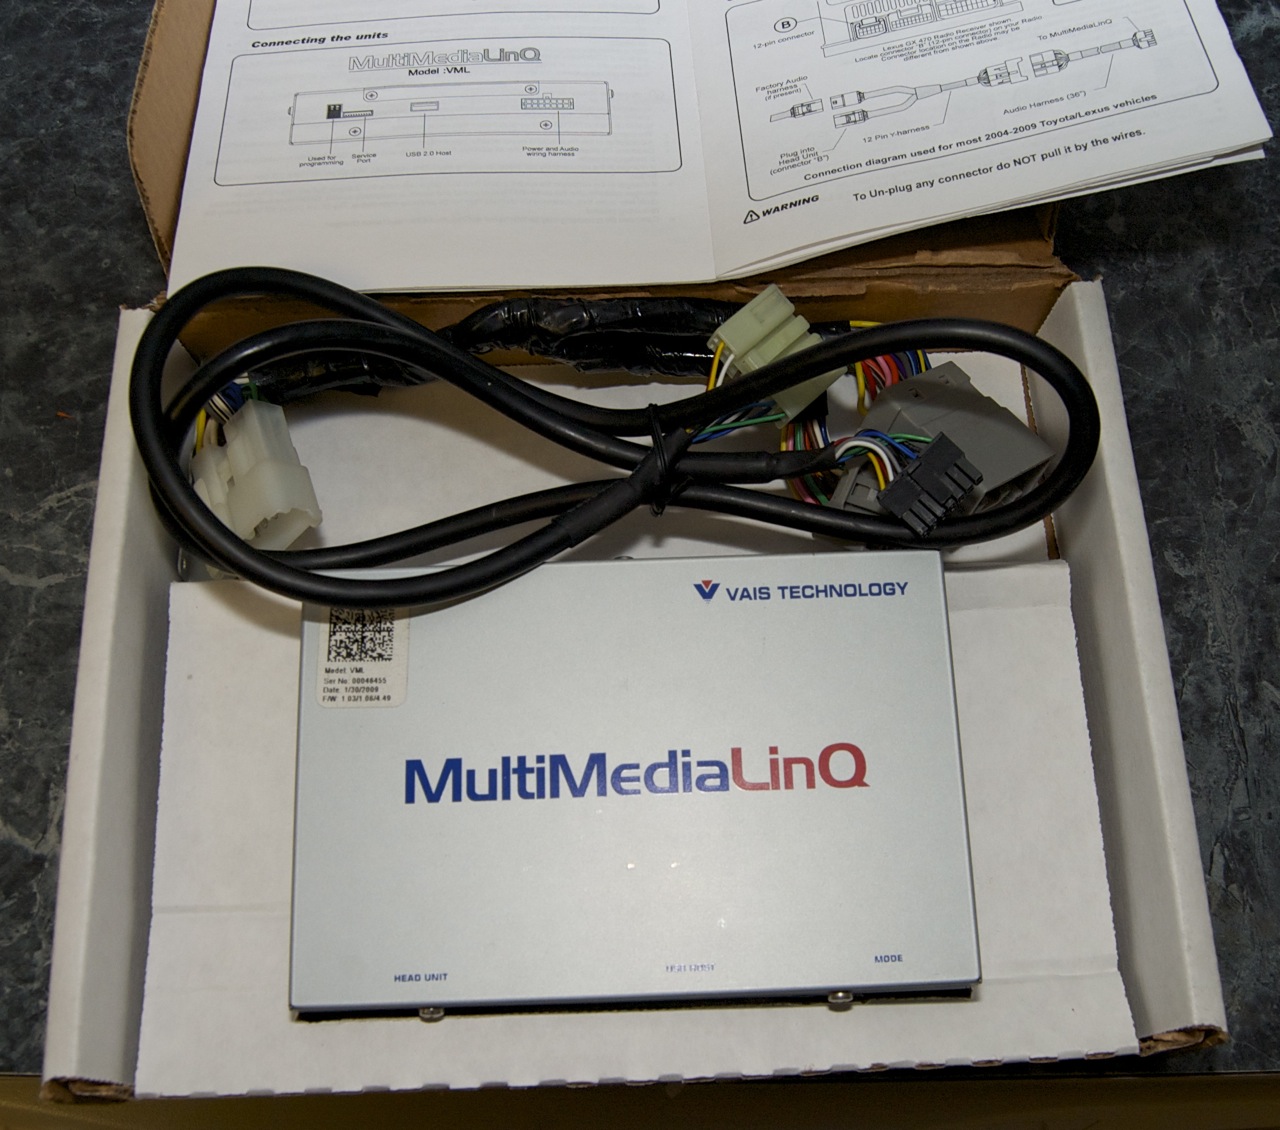 IL FS:FS: Vais Technology VML Multimedia w/ 80GB Drive Installed